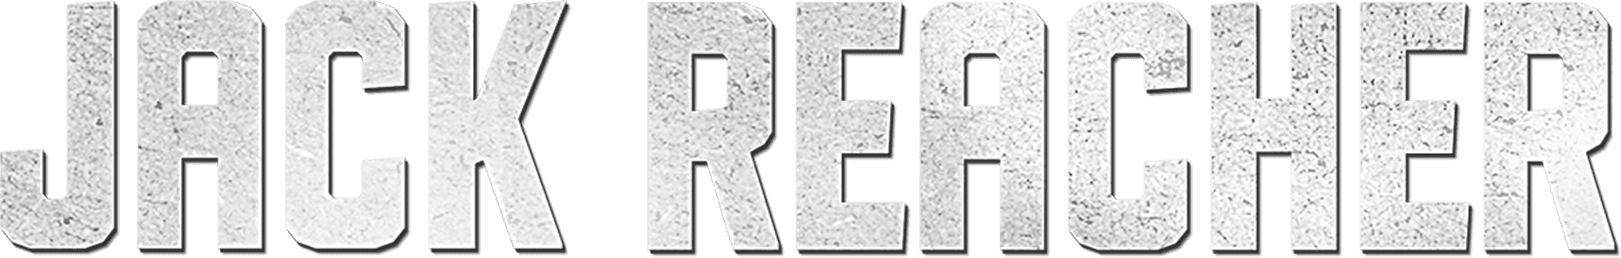 Jack Reacher logo